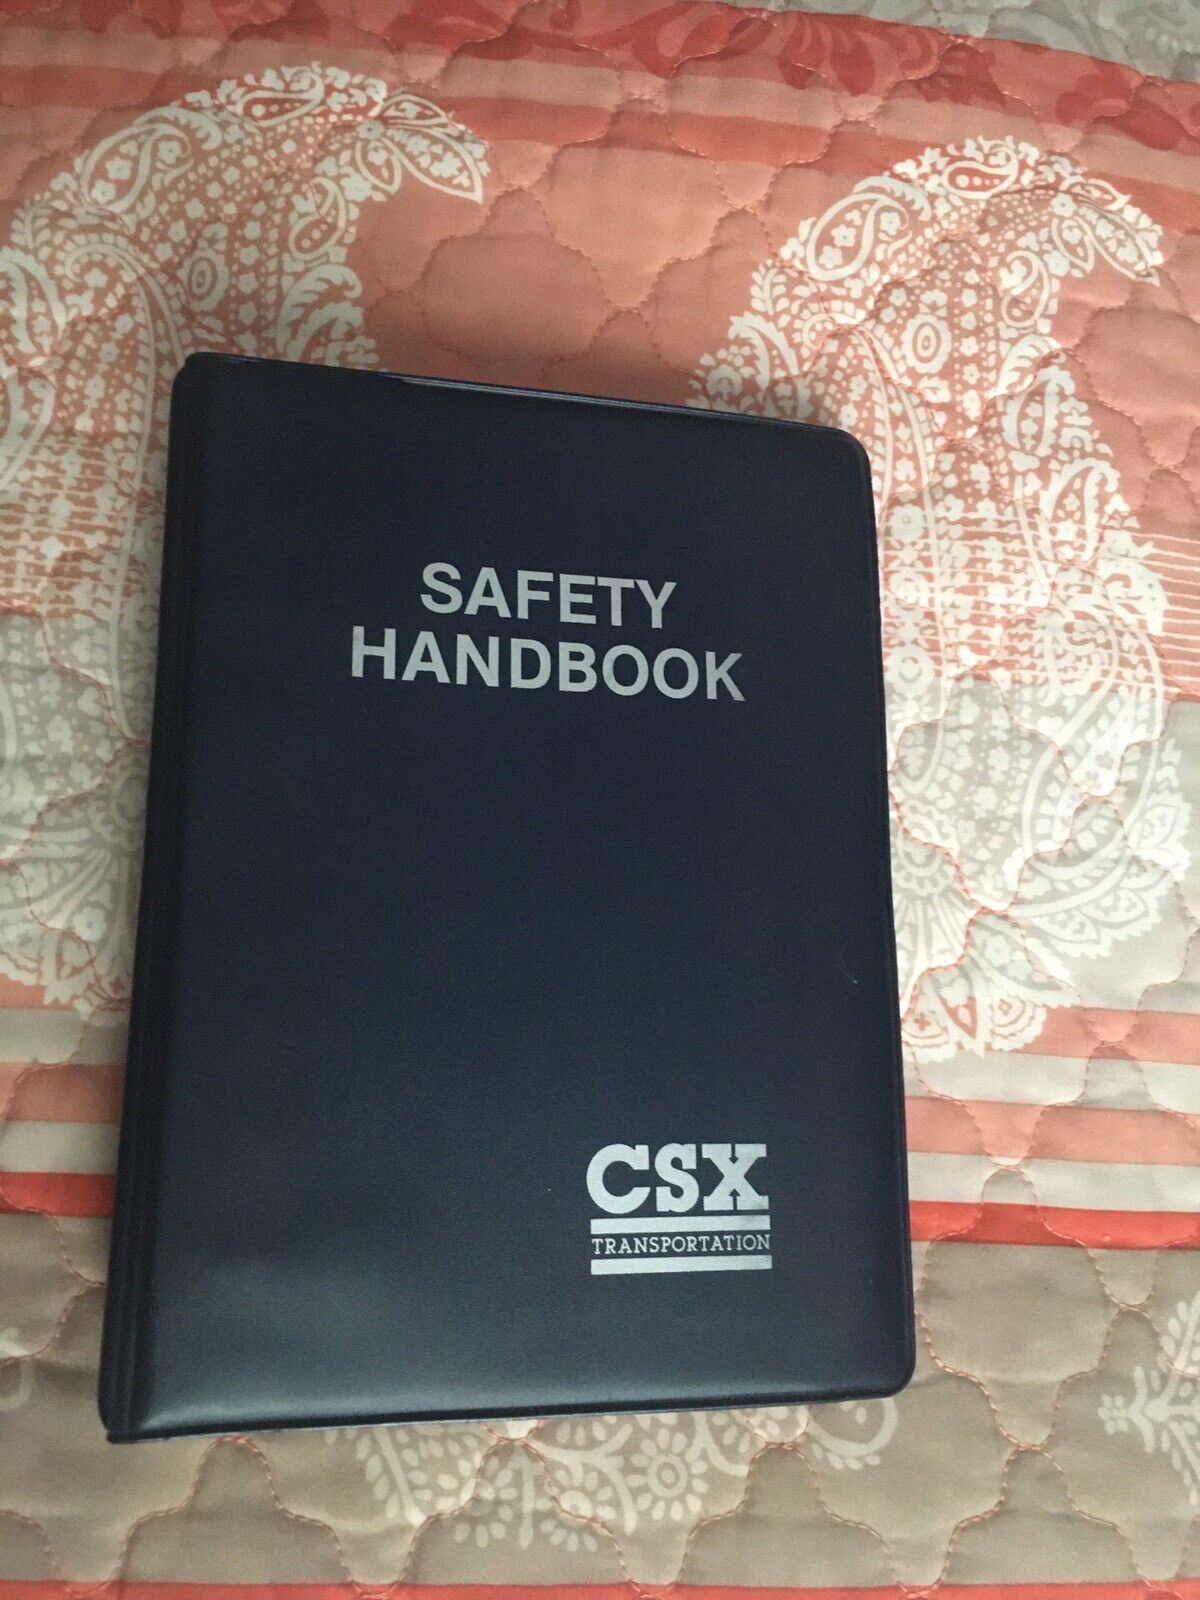 1989 CSX Transportation Safety Handbook Vintage Railroad Binder Very Good Cond.